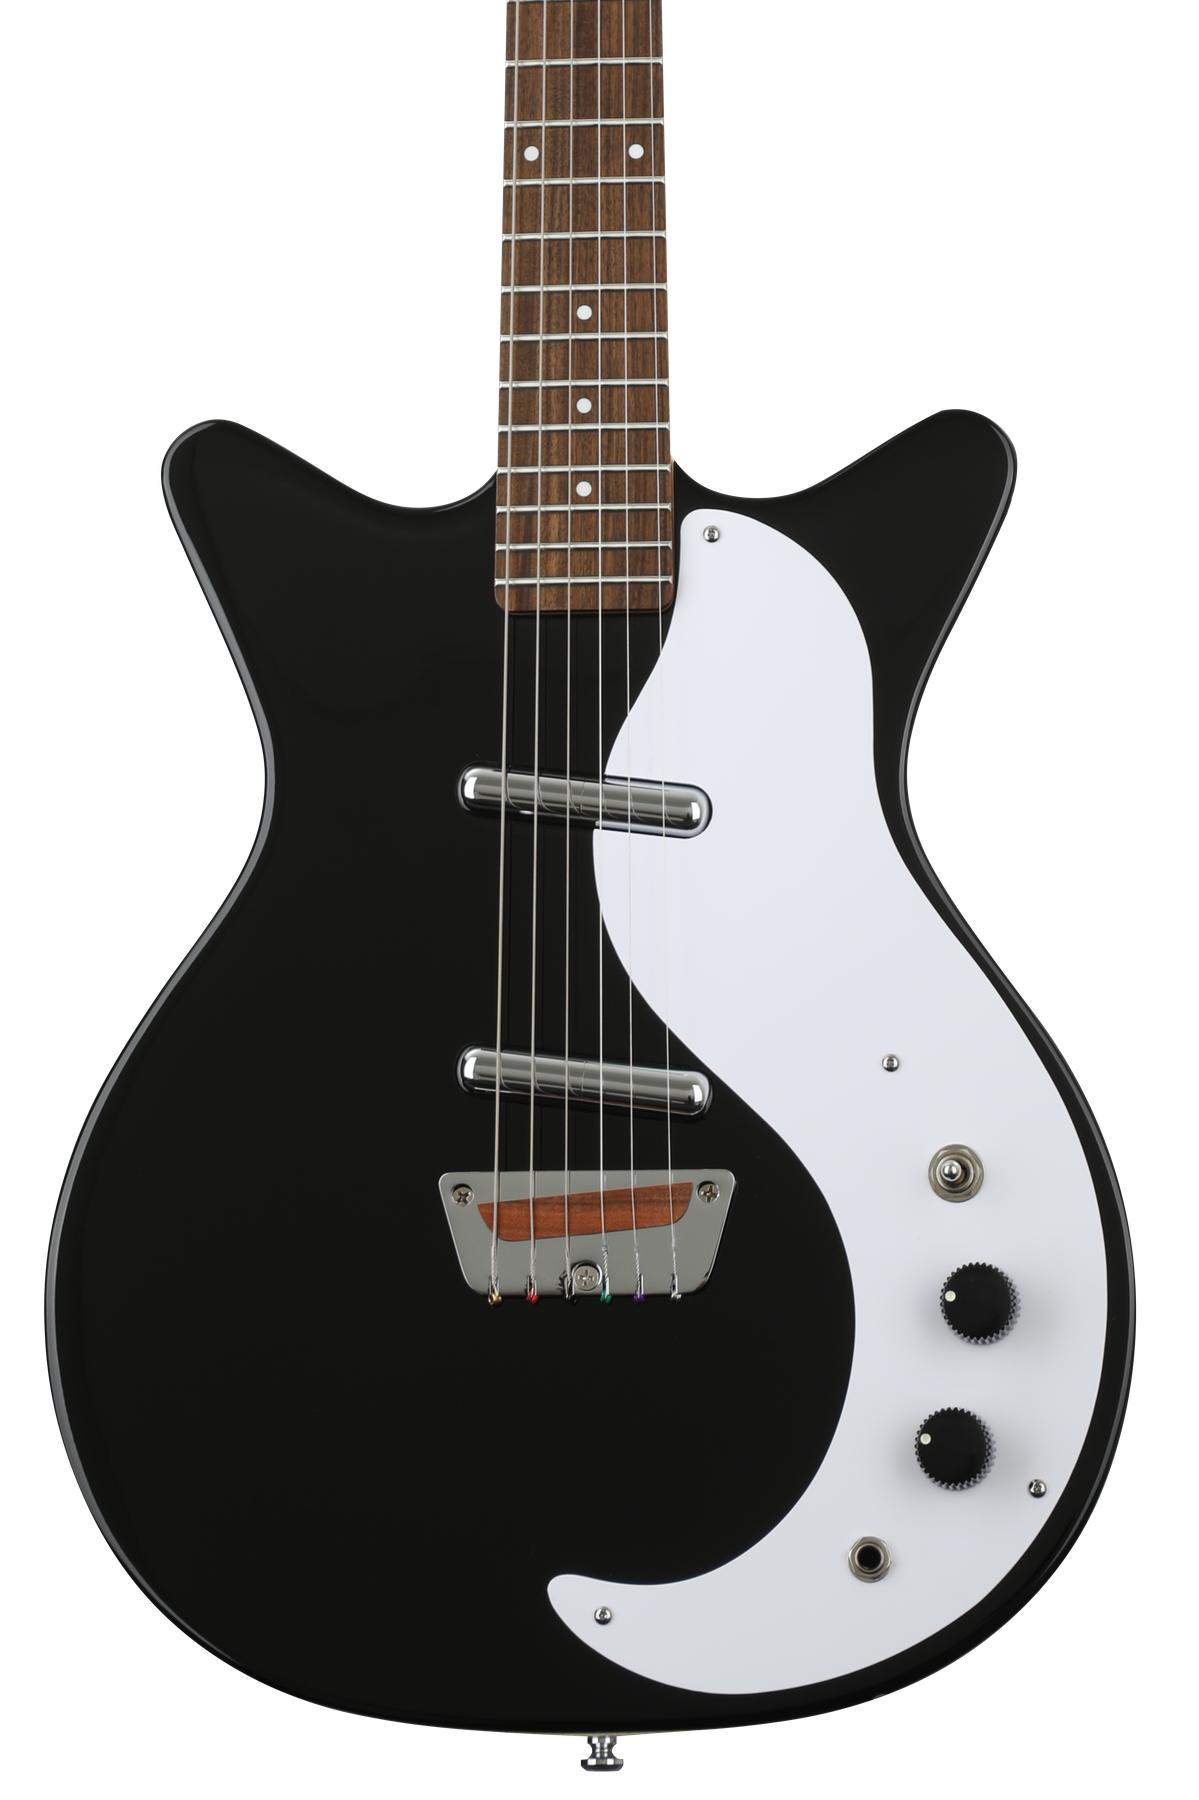 Danelectro Stock '59 Electric Guitar - Black |